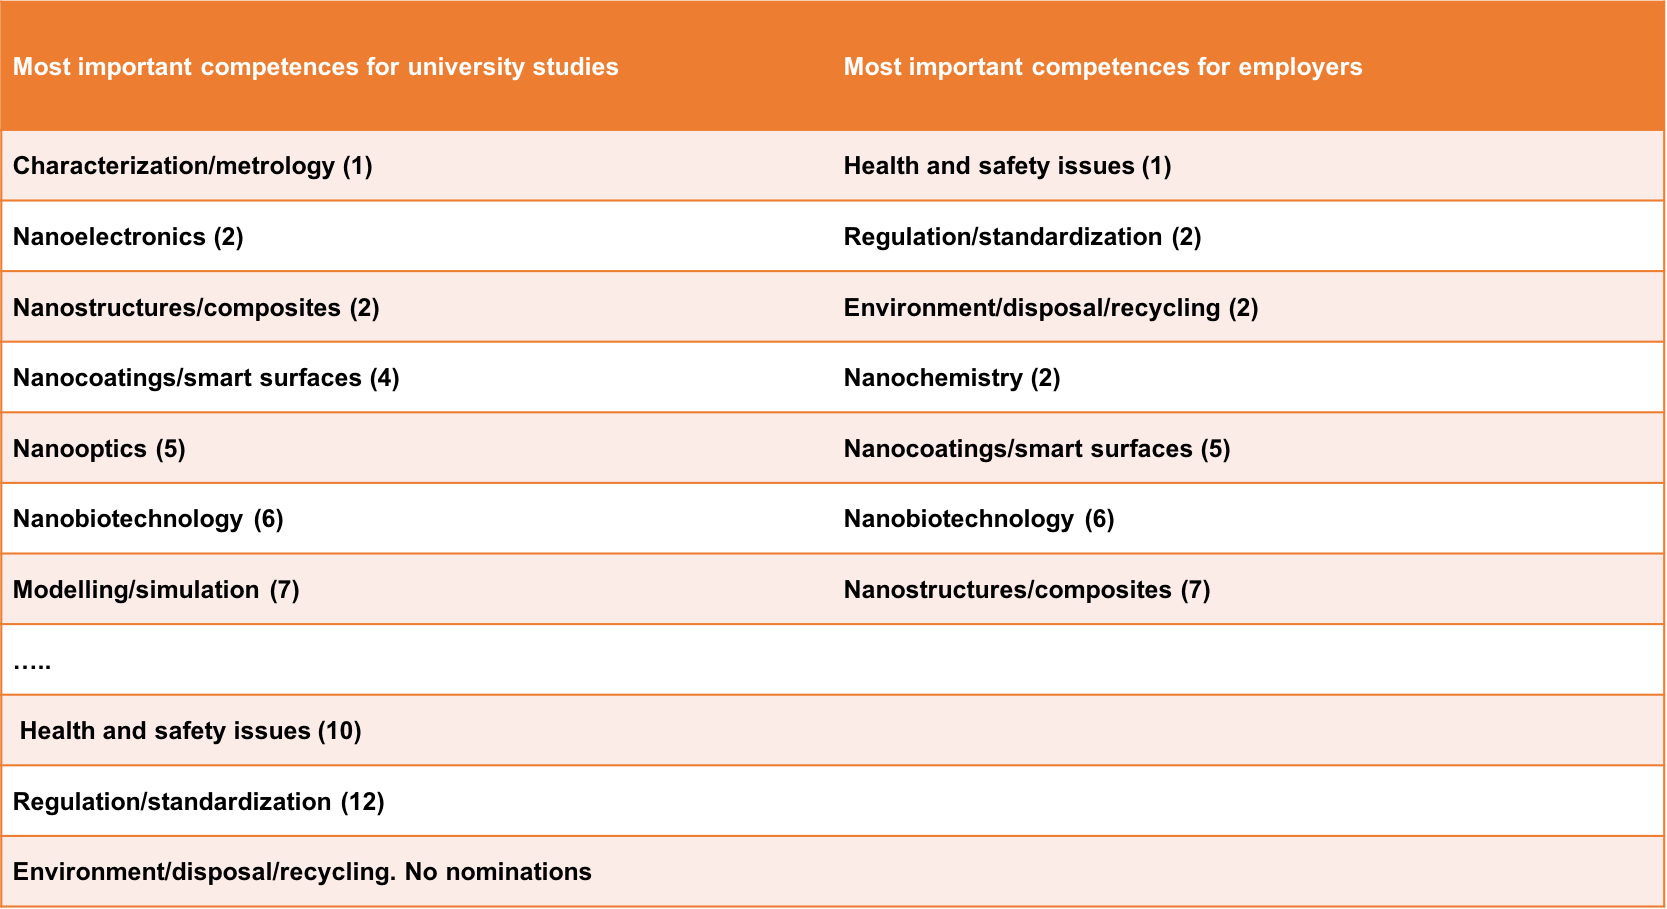 Competences survey © NanoEIS consortium